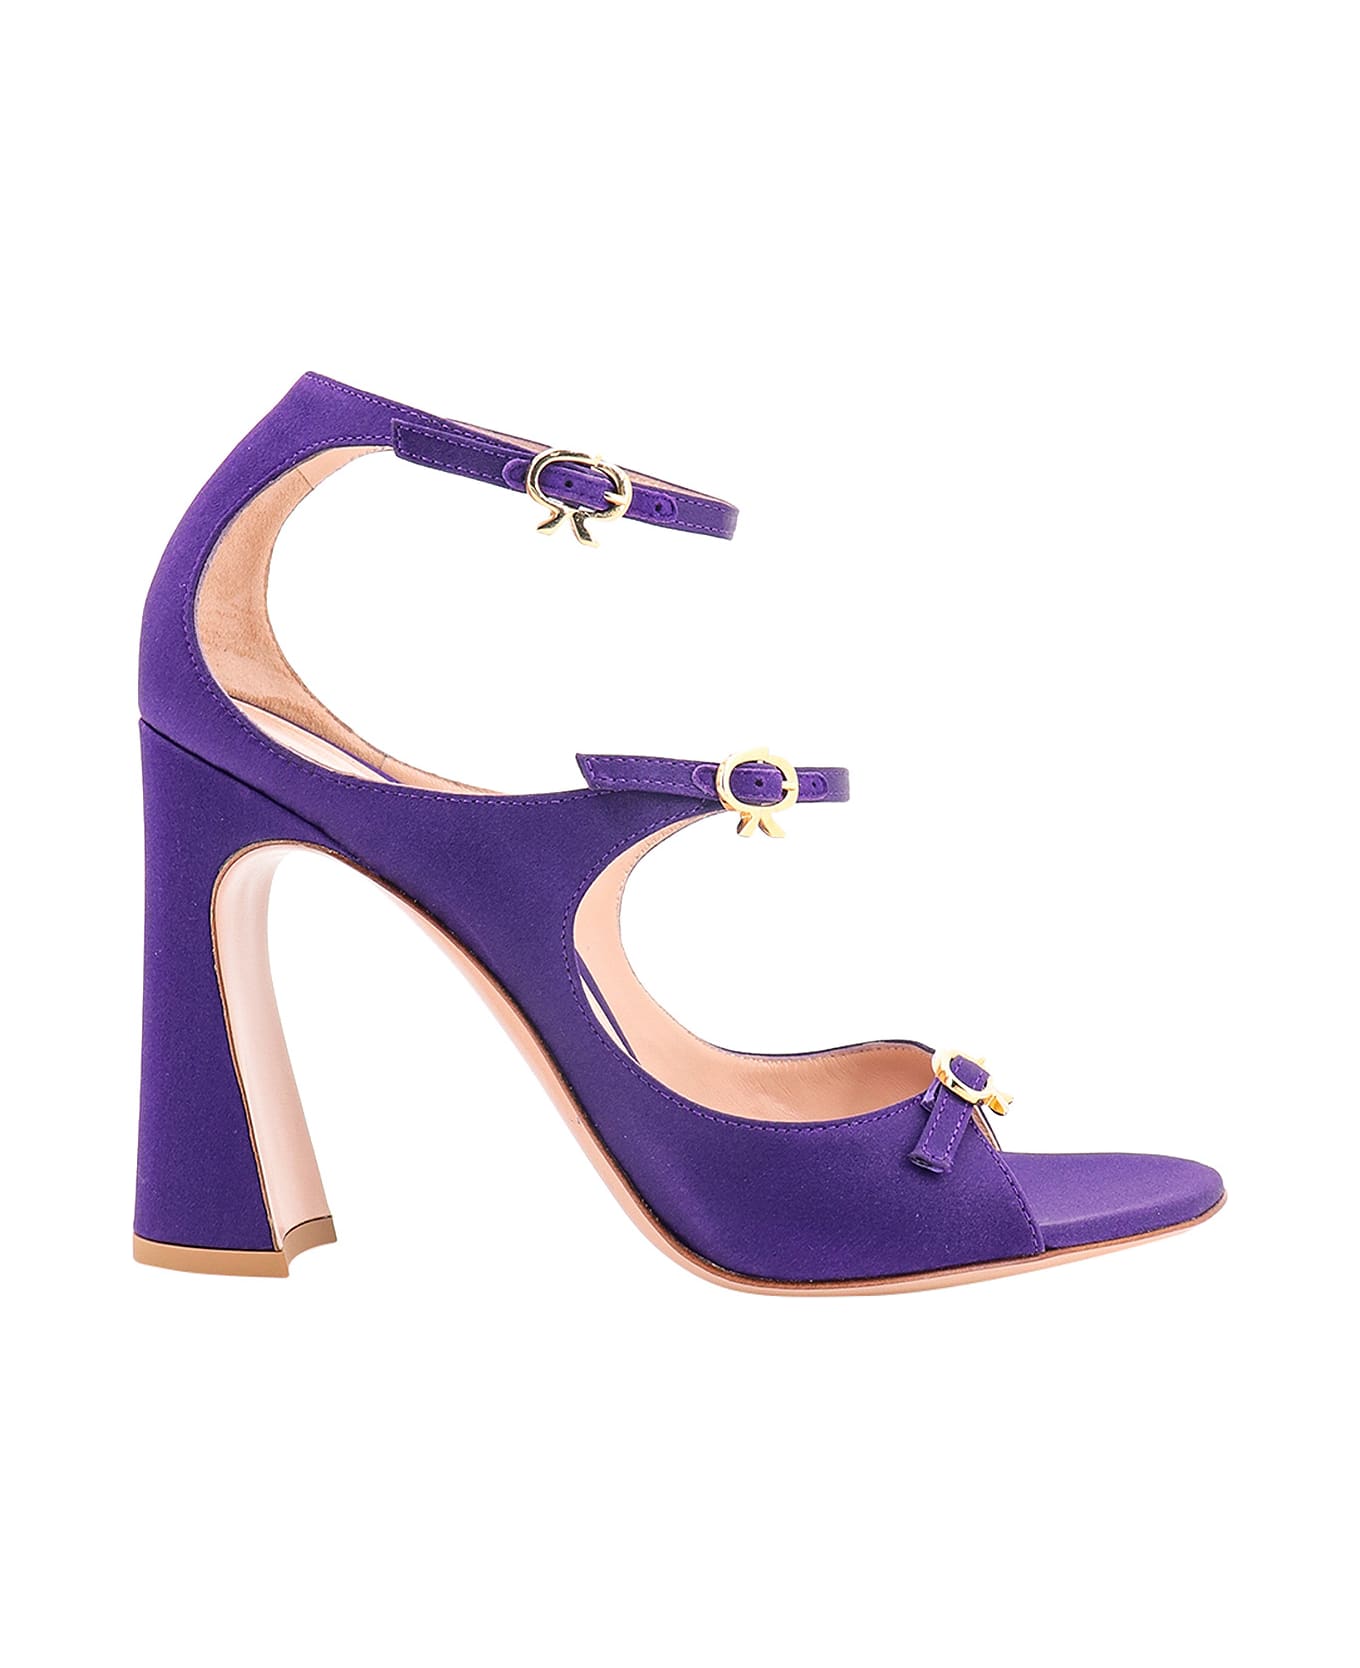 Gianvito Rossi Misty Sandals - Purple